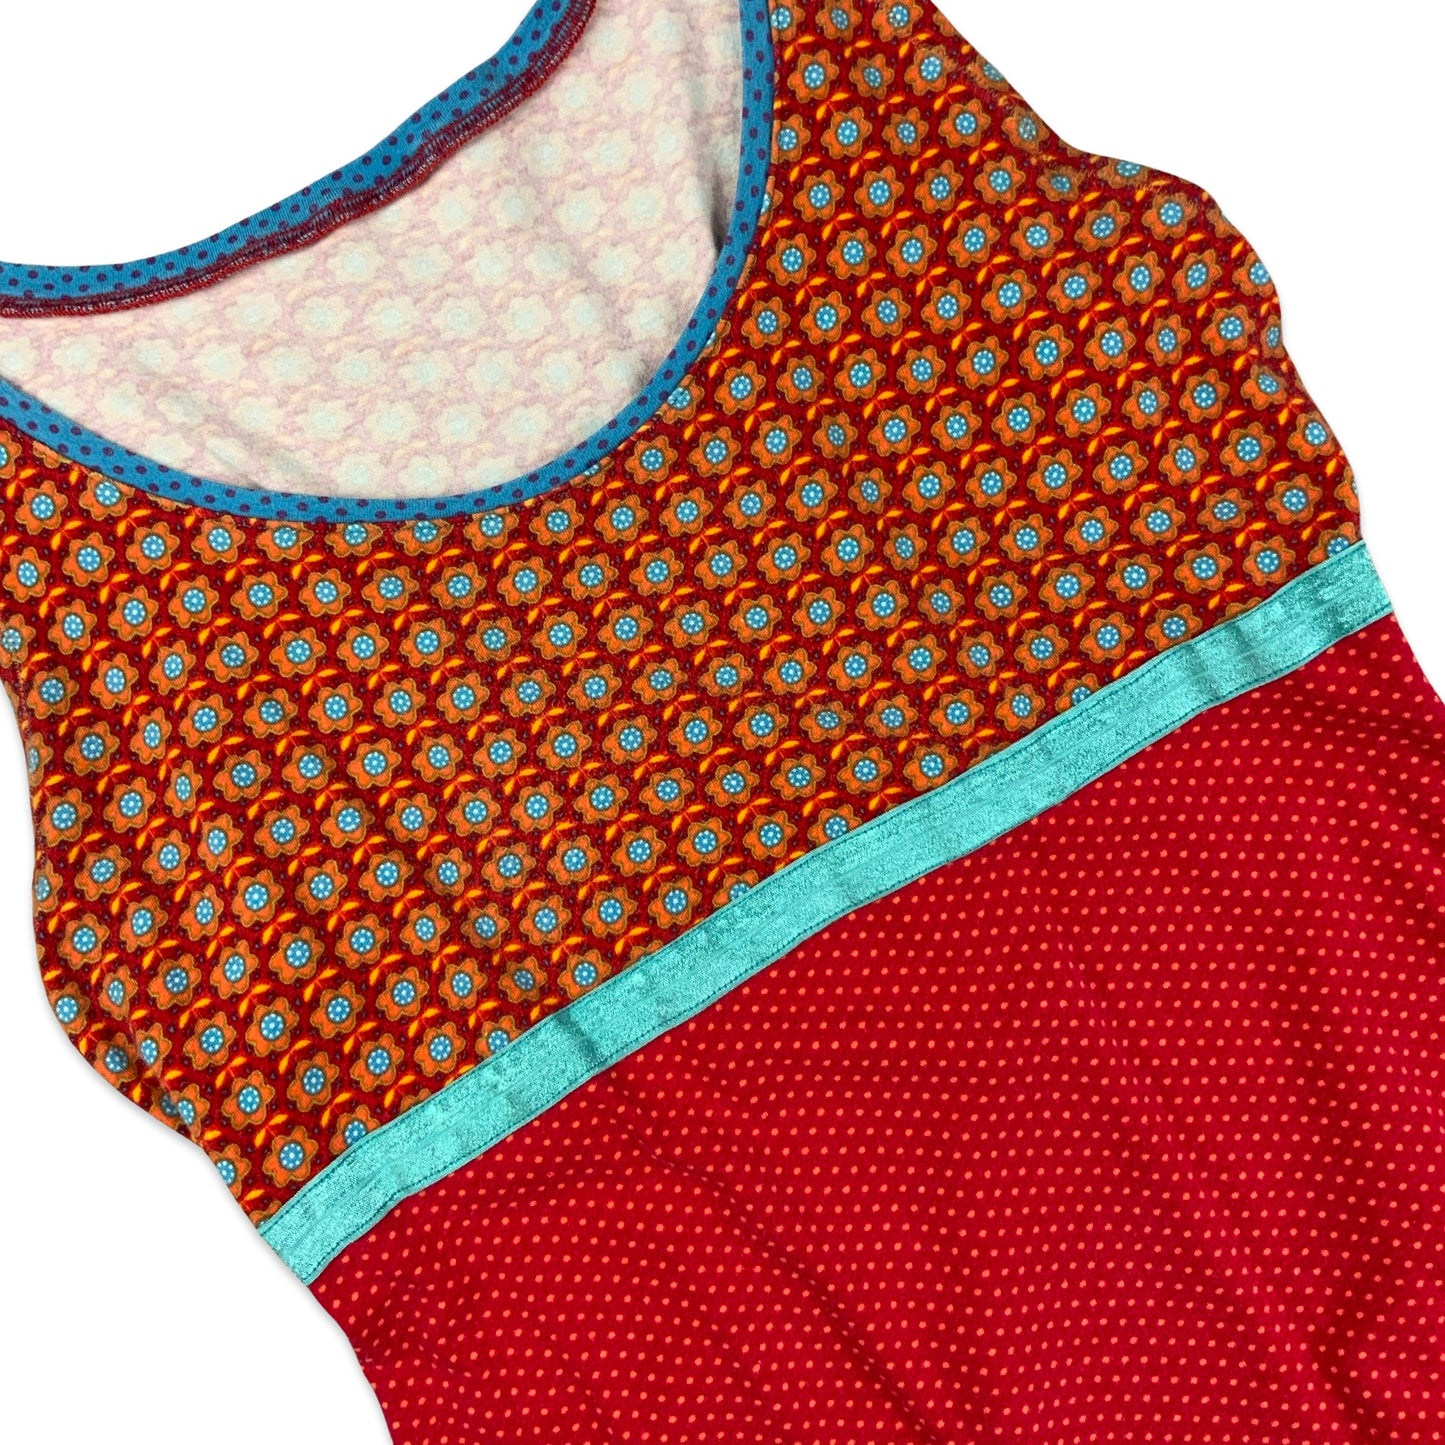 Vintage Red & Orange Floral Print Sleeveless Midi Dress 8 10